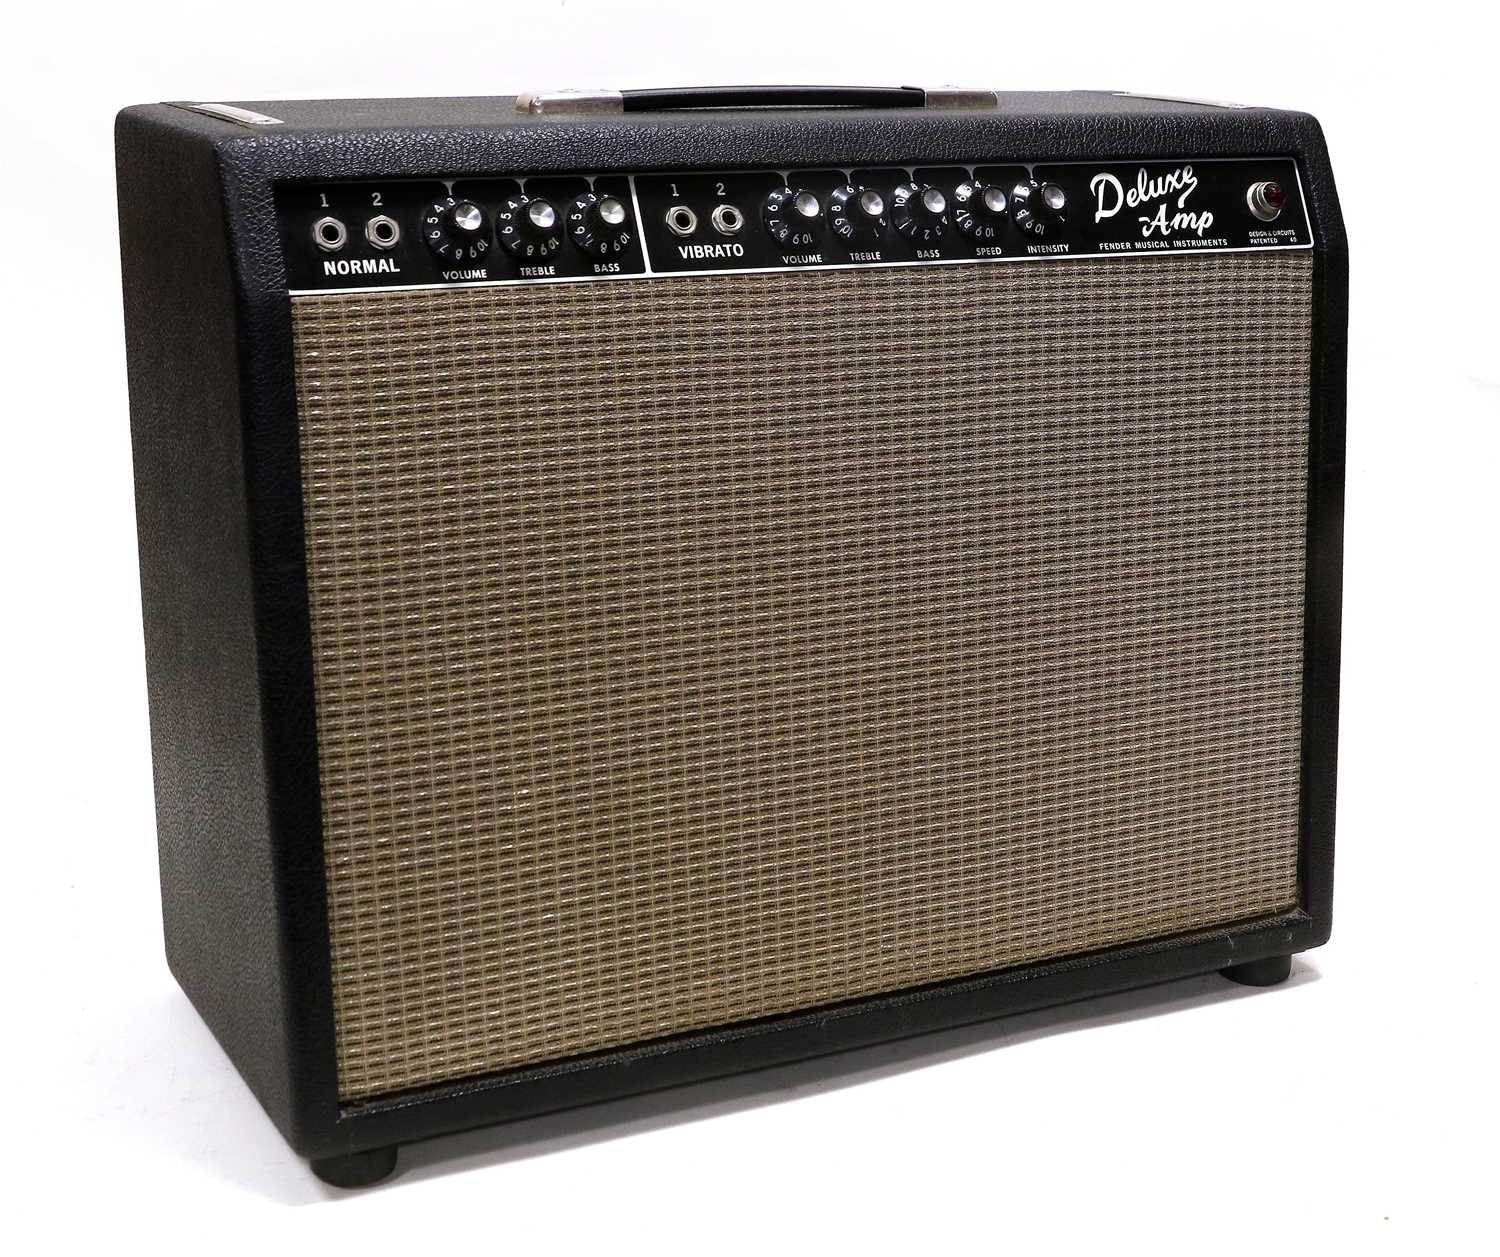 Lot 86 - Fender DeLuxe Amp